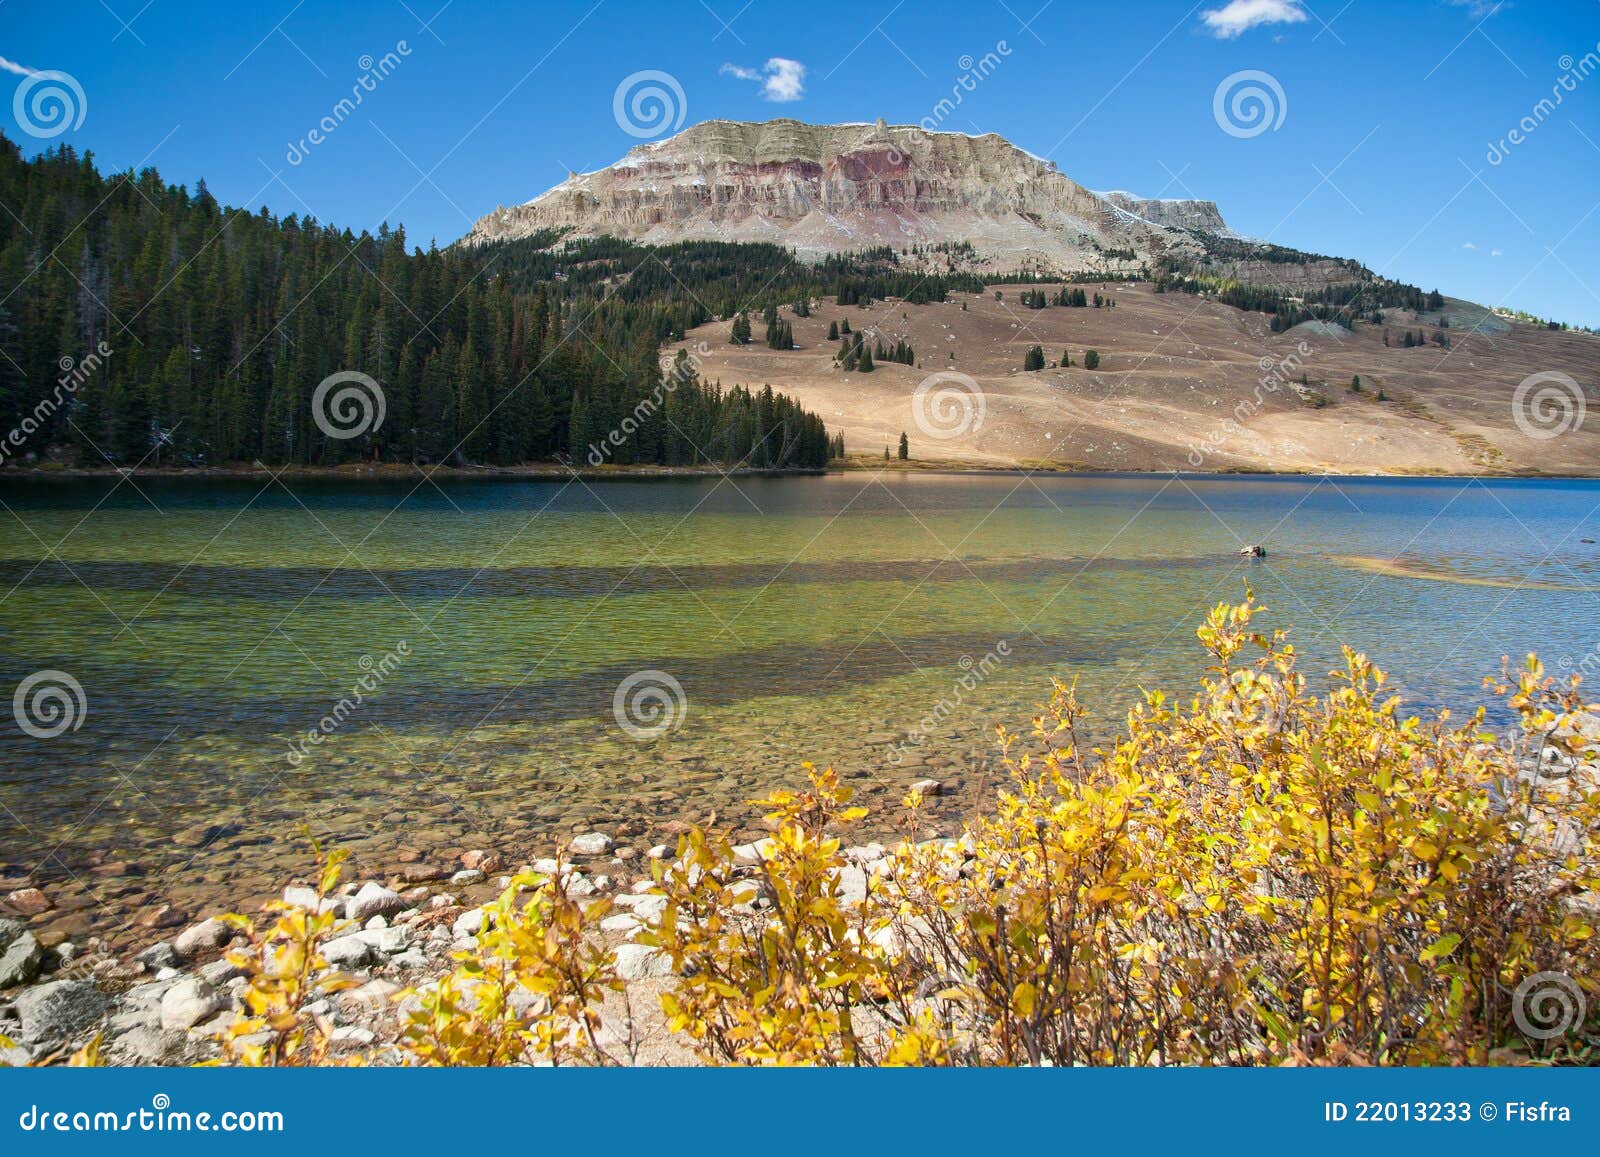 beartooth lake, montana, usa